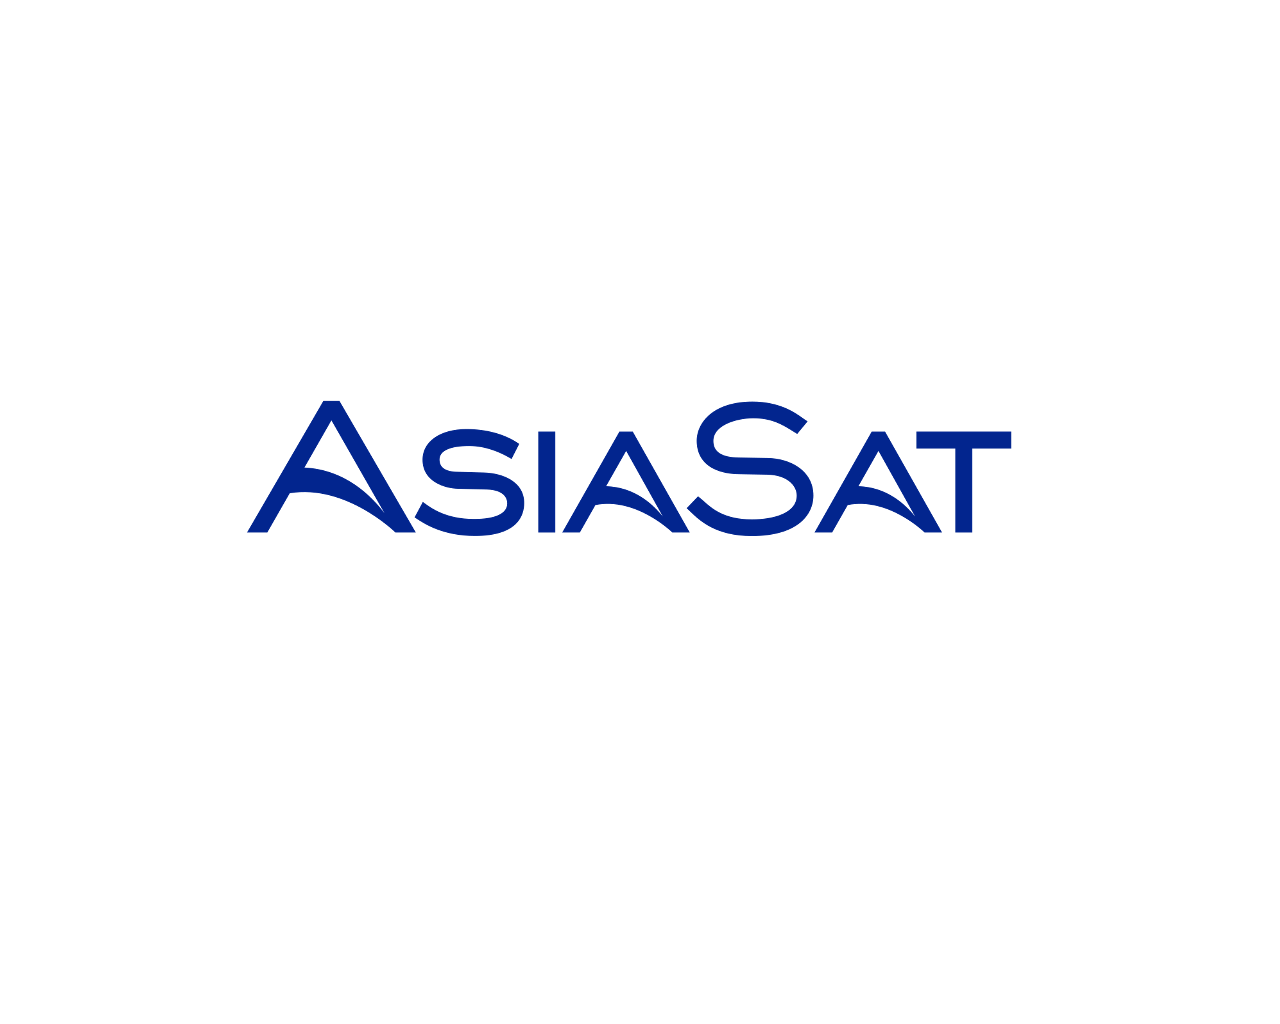 AsiaSat logo